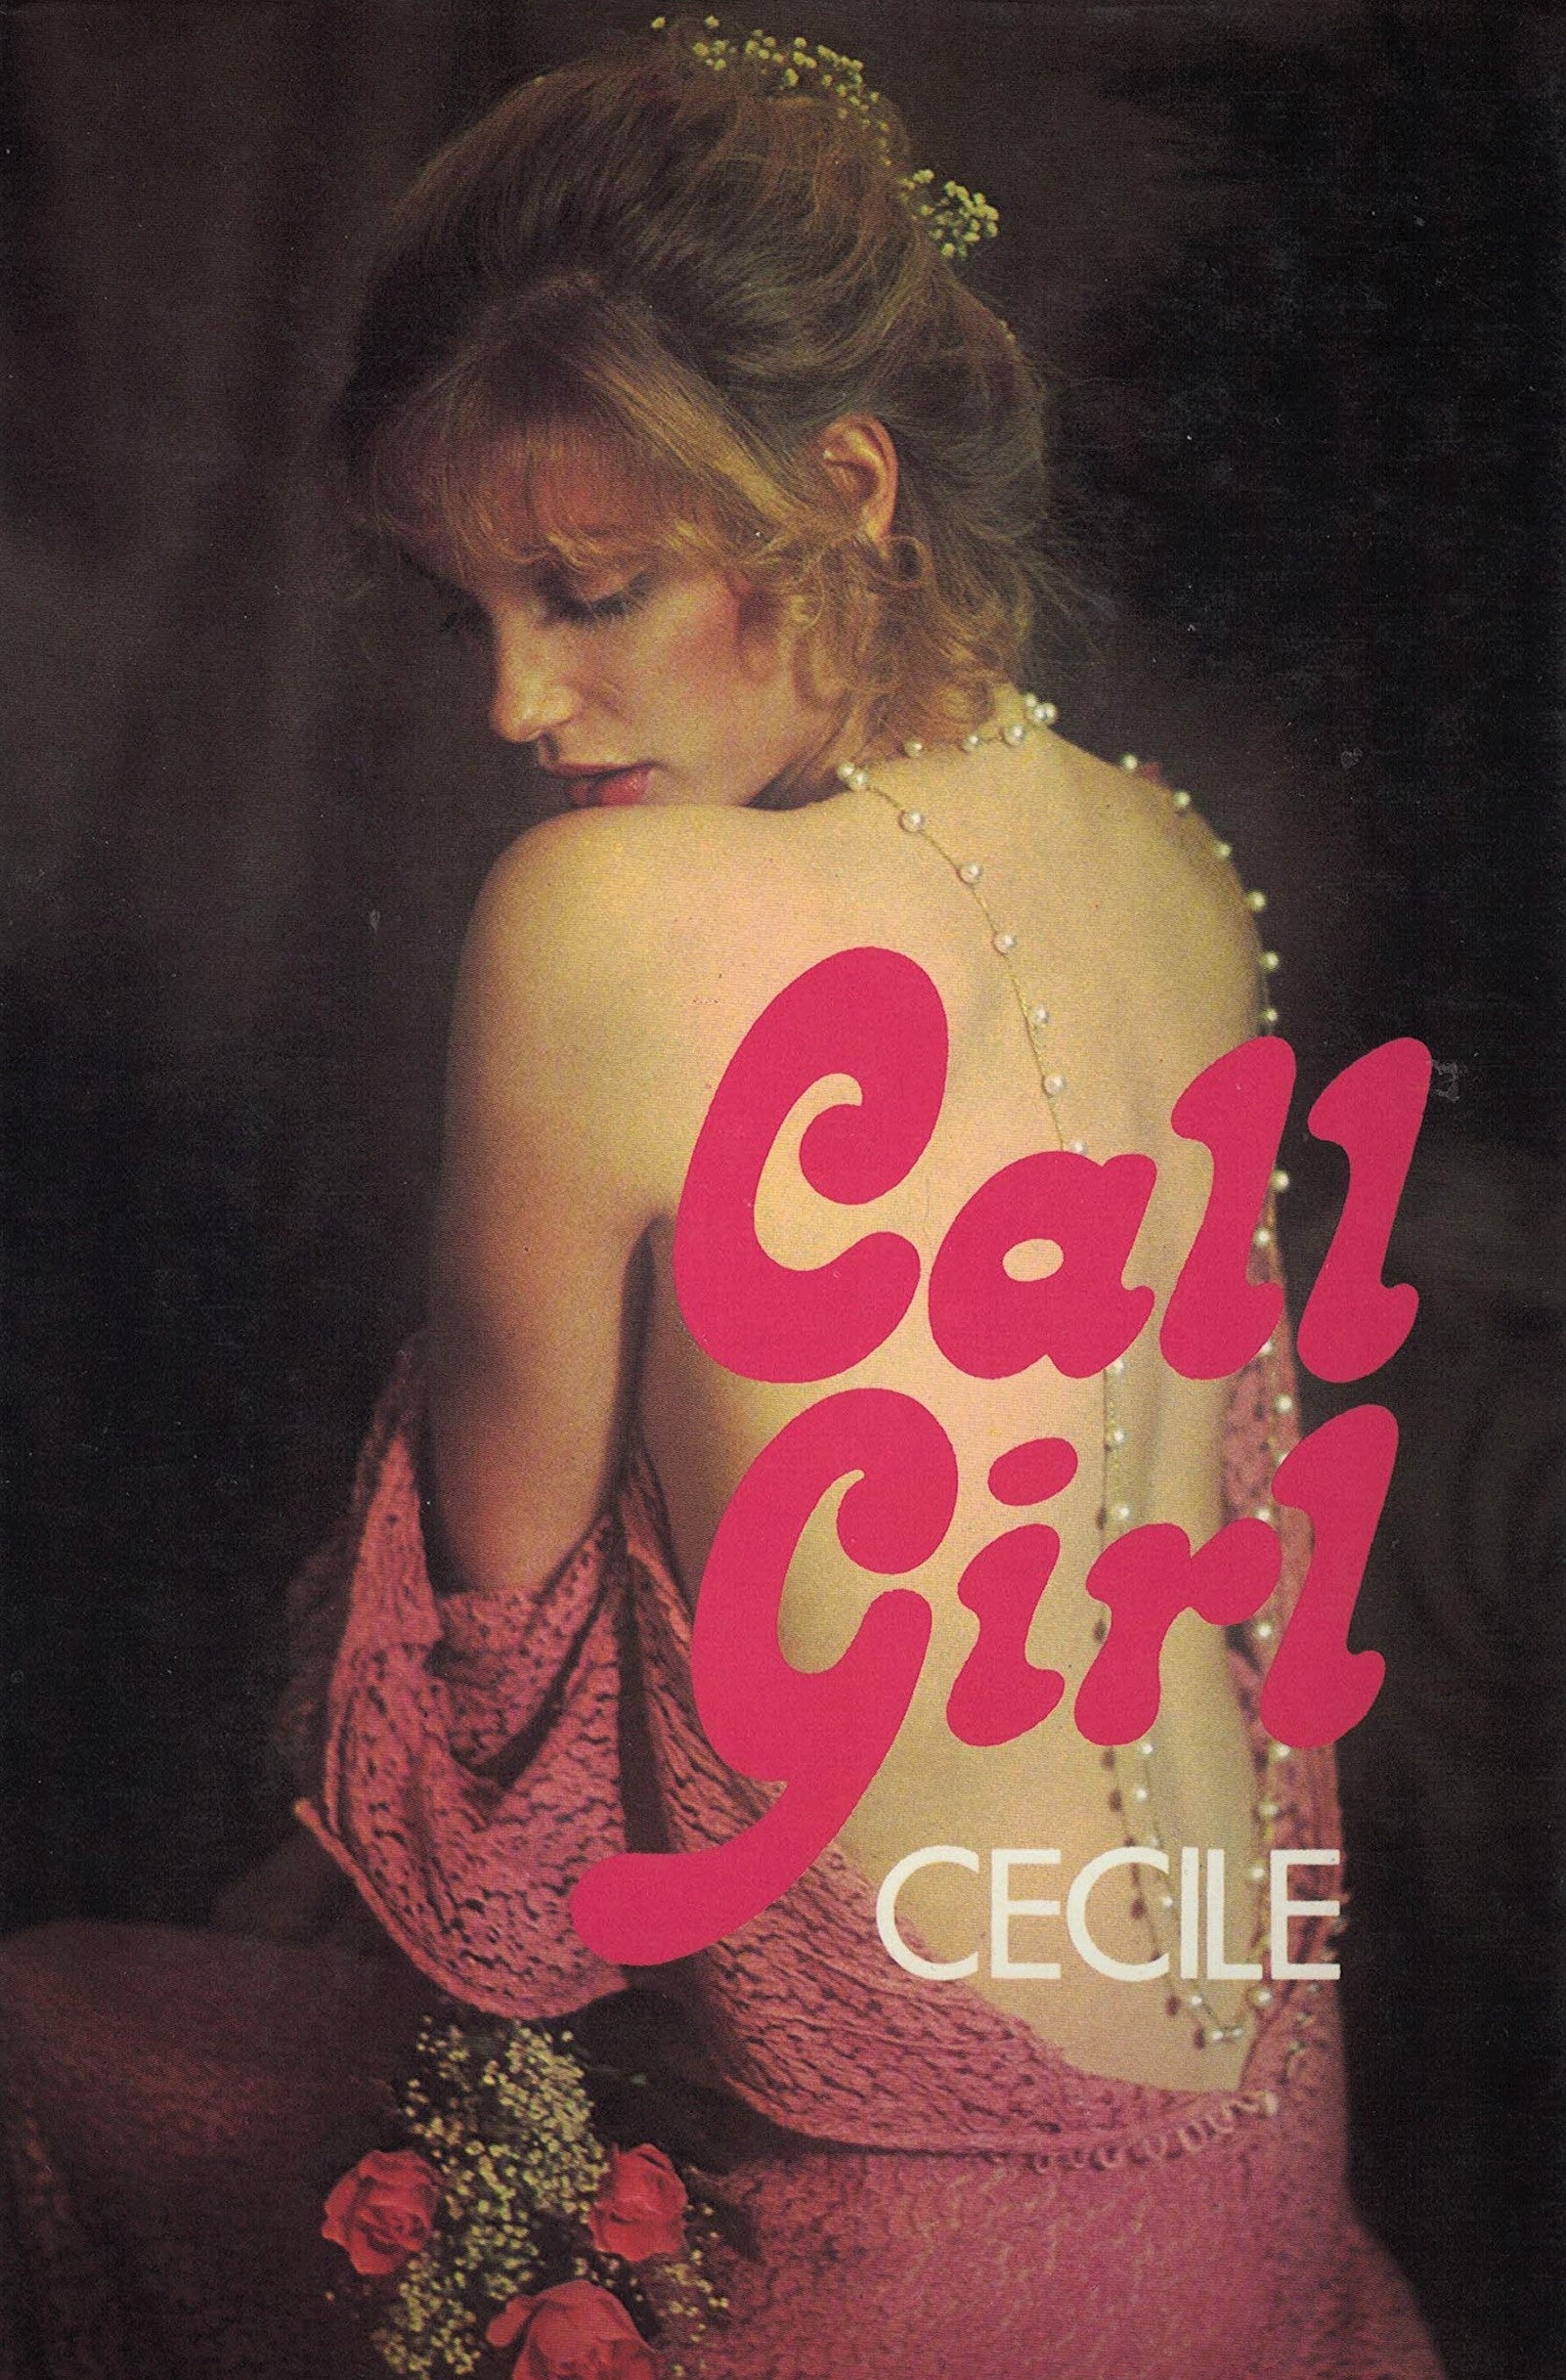 Livre ISBN 2890290069 Call-girl (Cécile)